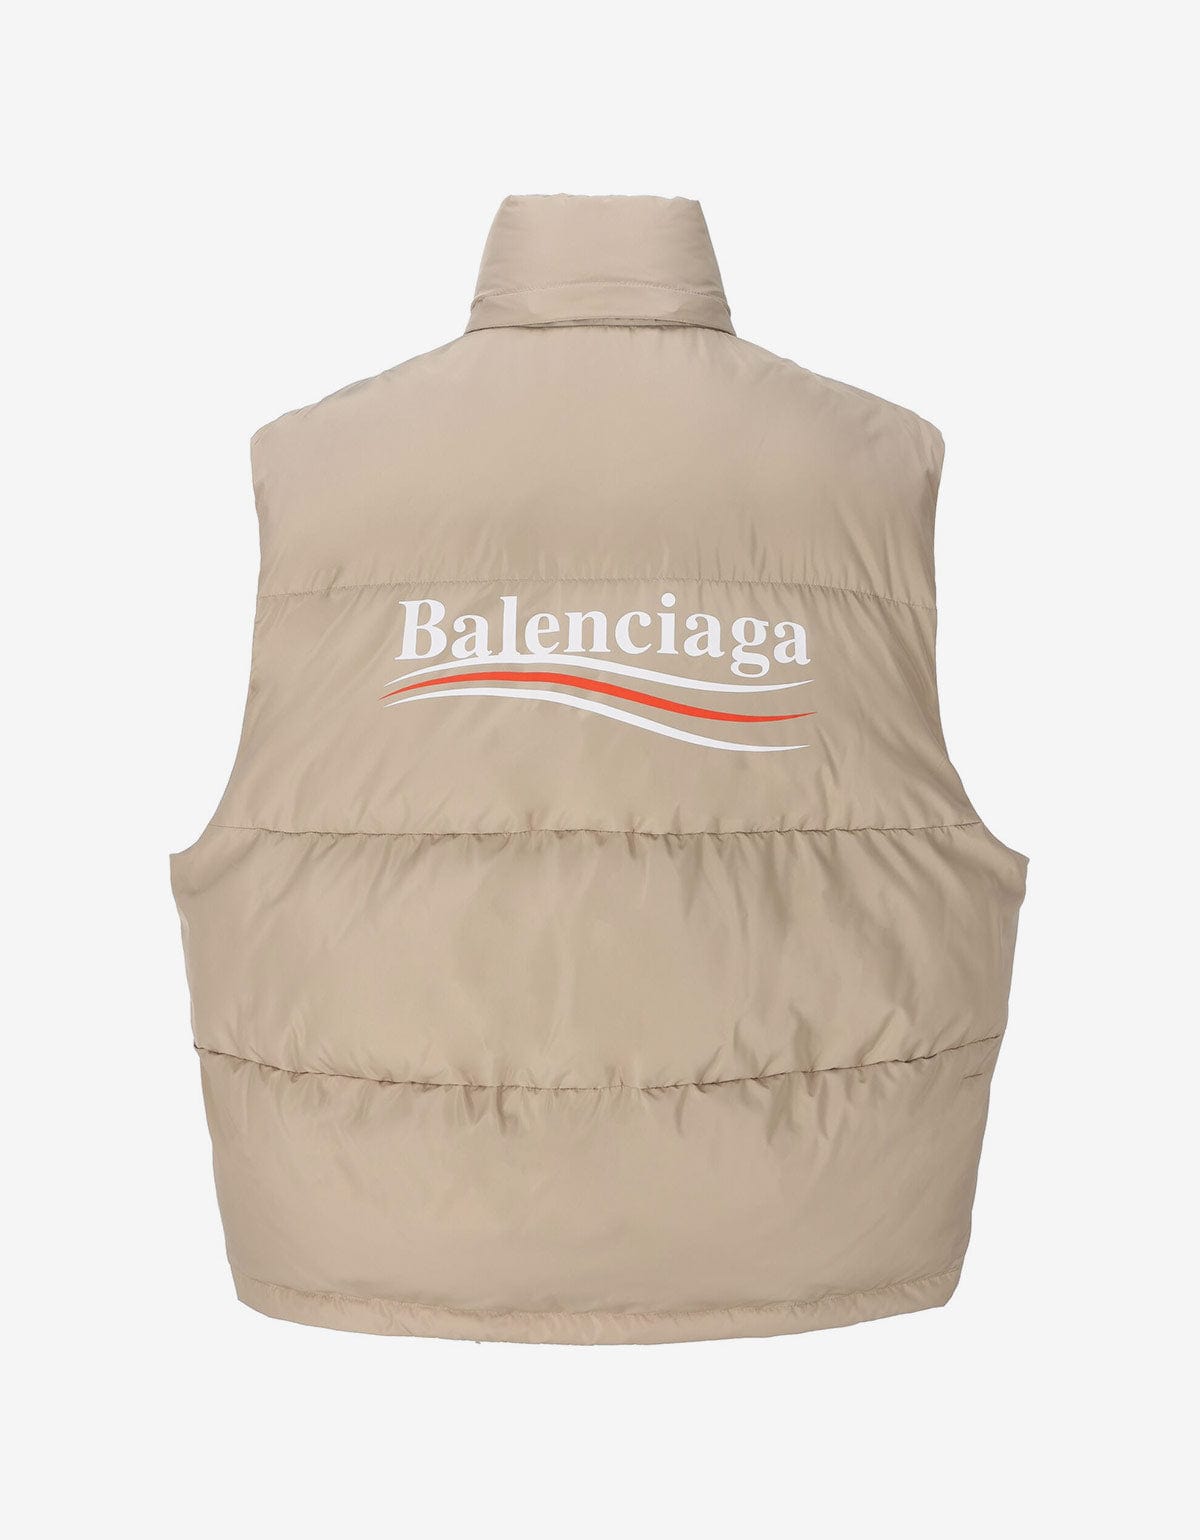 Balenciaga Beige Political Campaign Cocoon Puffer Gilet